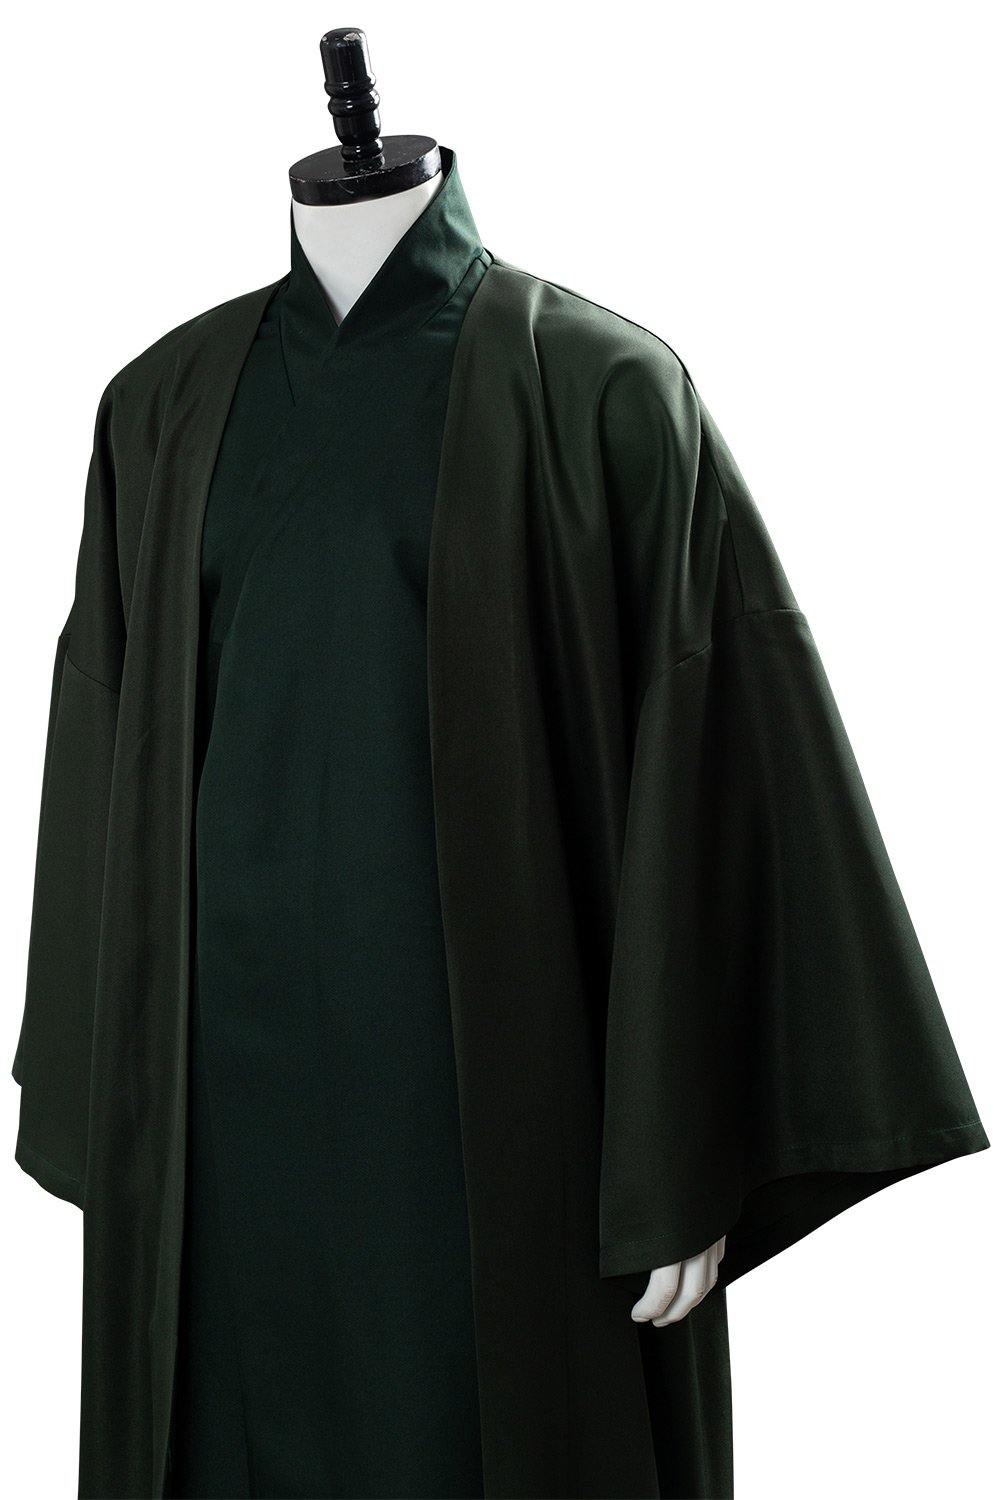 Harry Potter Lord Voldemort Kimono Inner/Außer Robe Cosplay Kostüm NEU - cosplaycartde